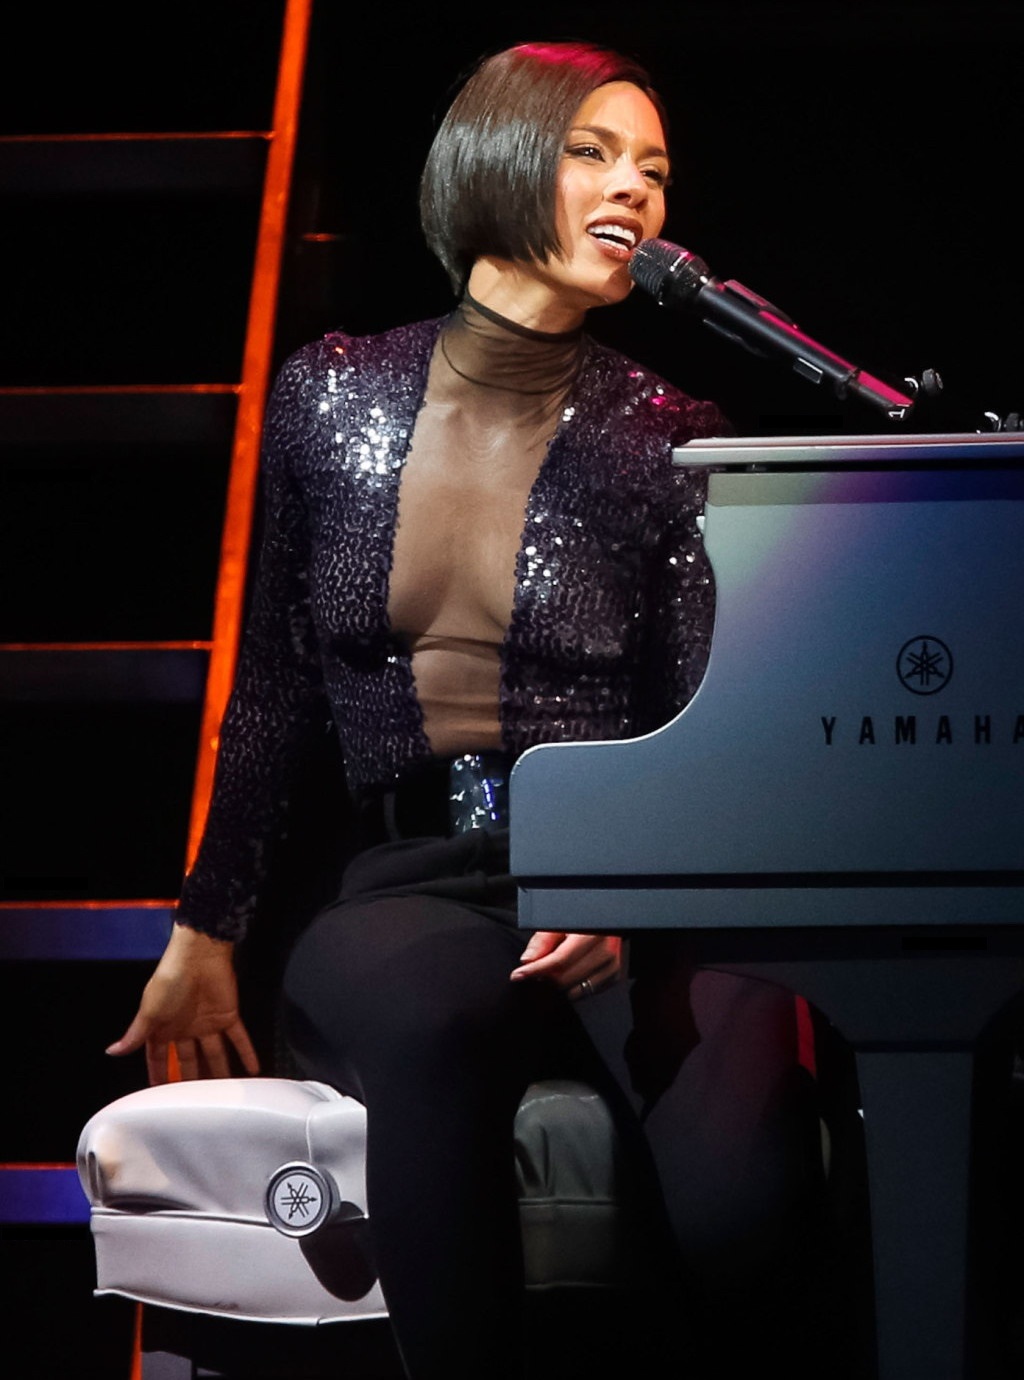 Alicia Keys 2013 : Alicia Keys - Performing at the Staples Center -05. 